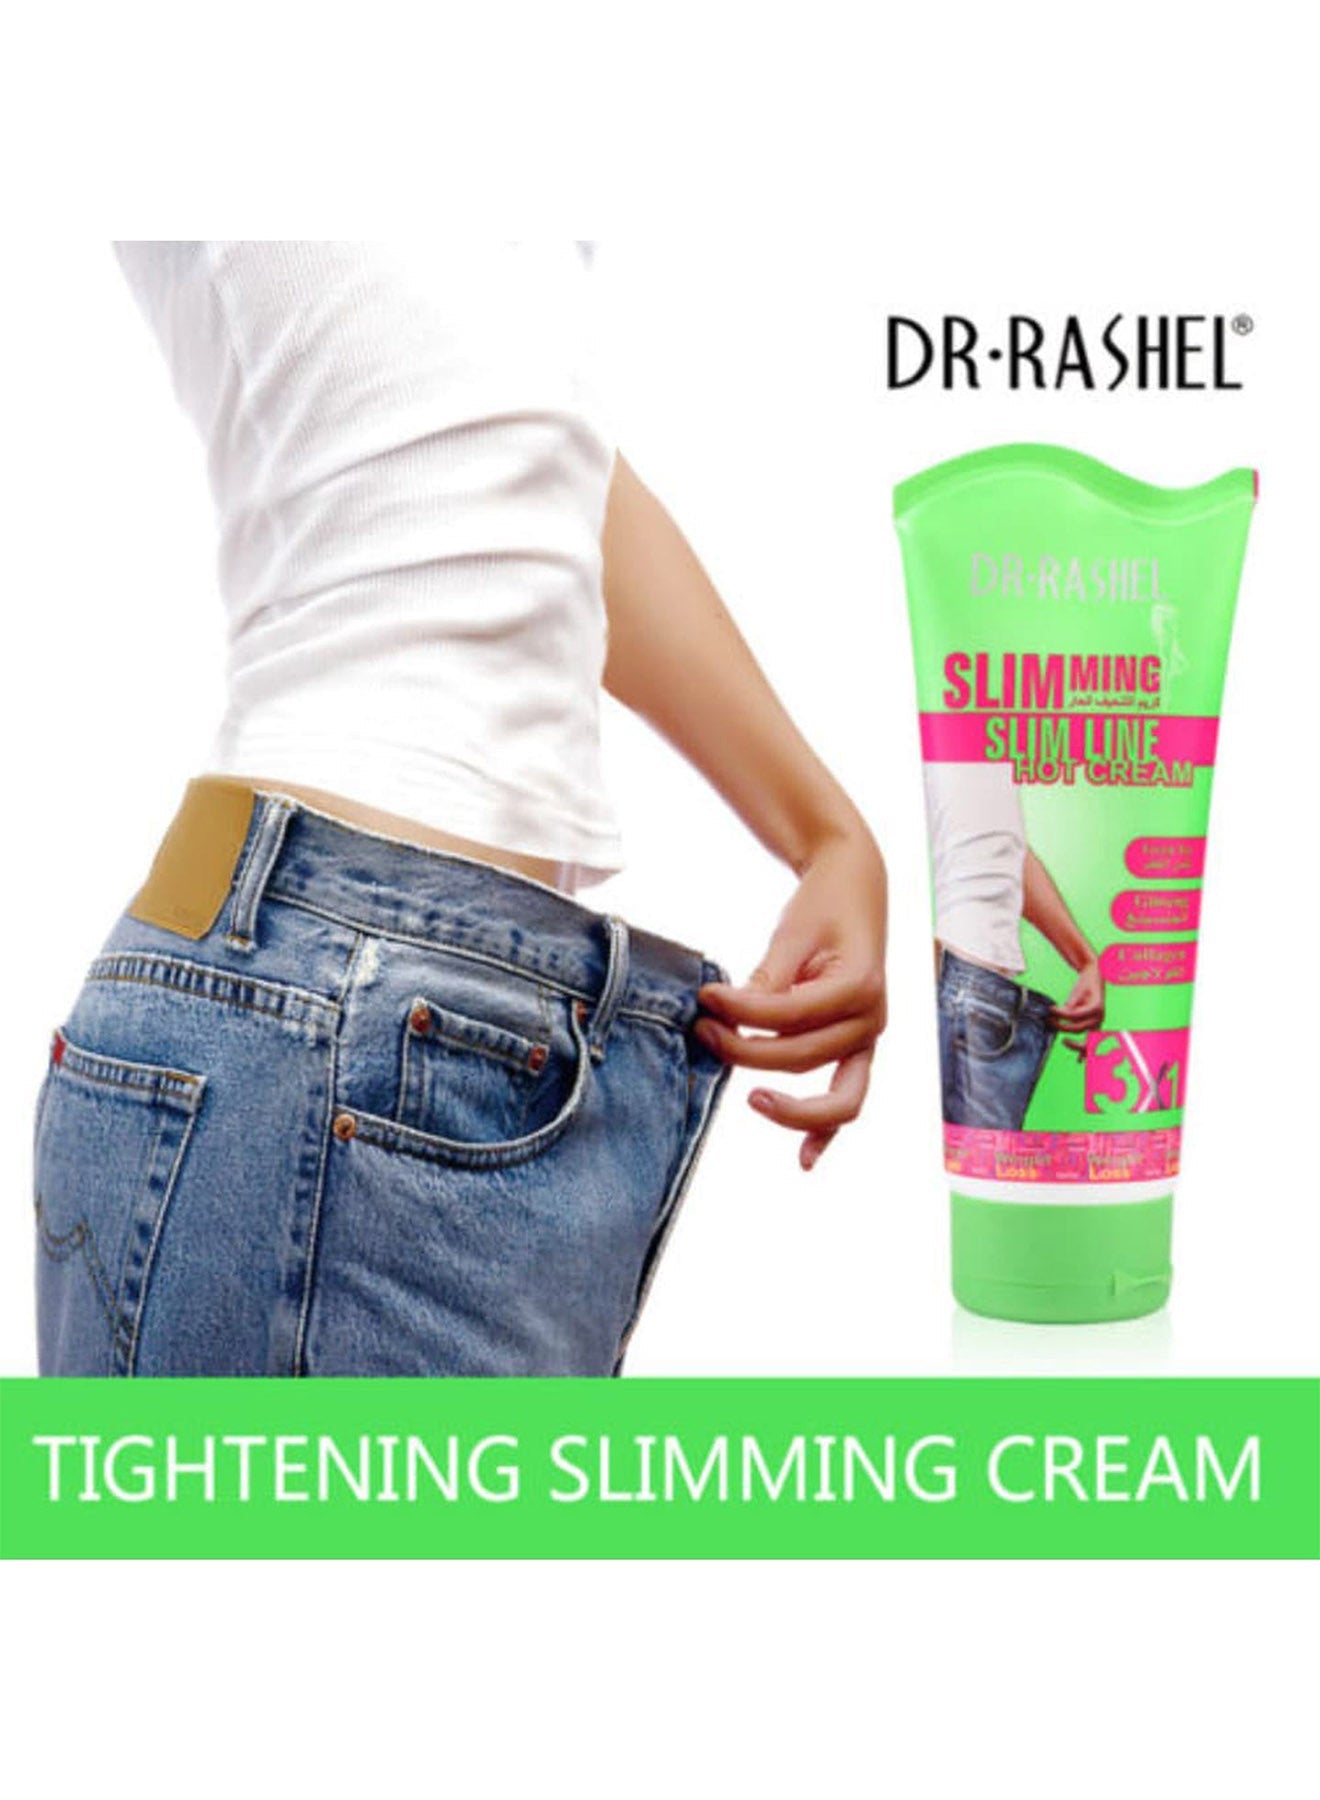 Dr Rashel Collagen lose weight milk Body stomach Hot Slimming Cream 150g Value Pack of 2 